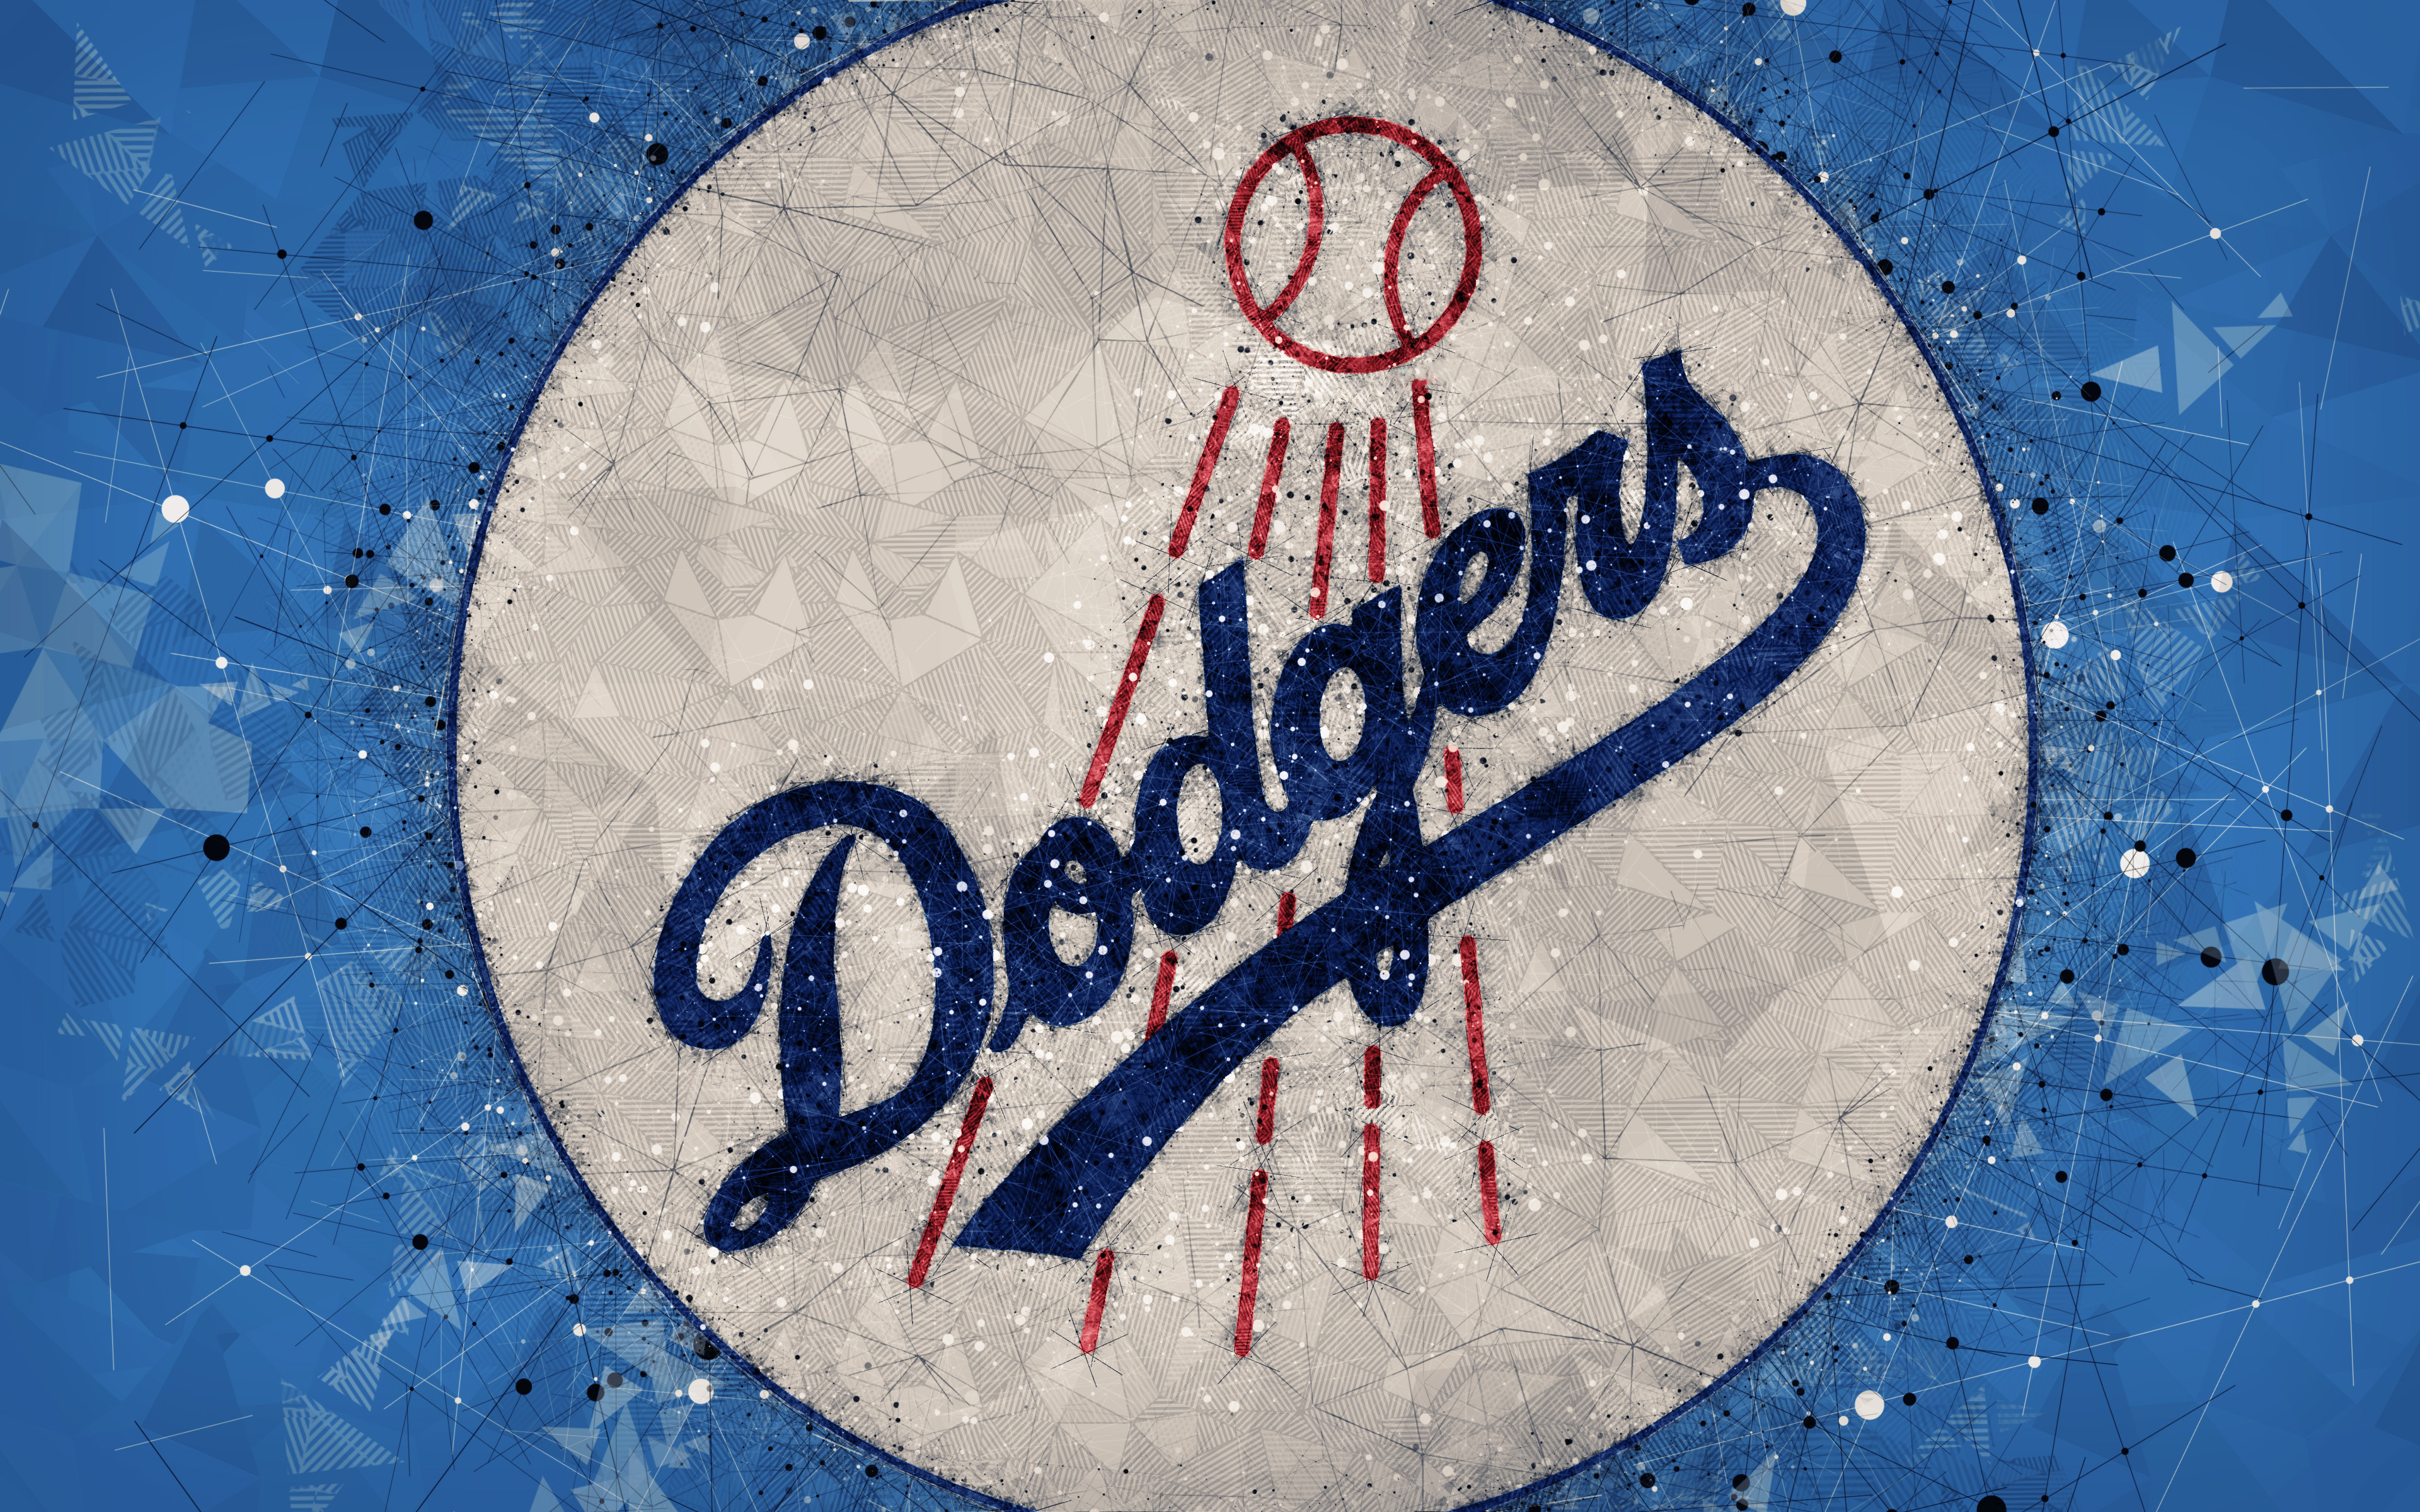 Free La Dodgers Wallpaper, La Dodgers Wallpaper Download - WallpaperUse - 1